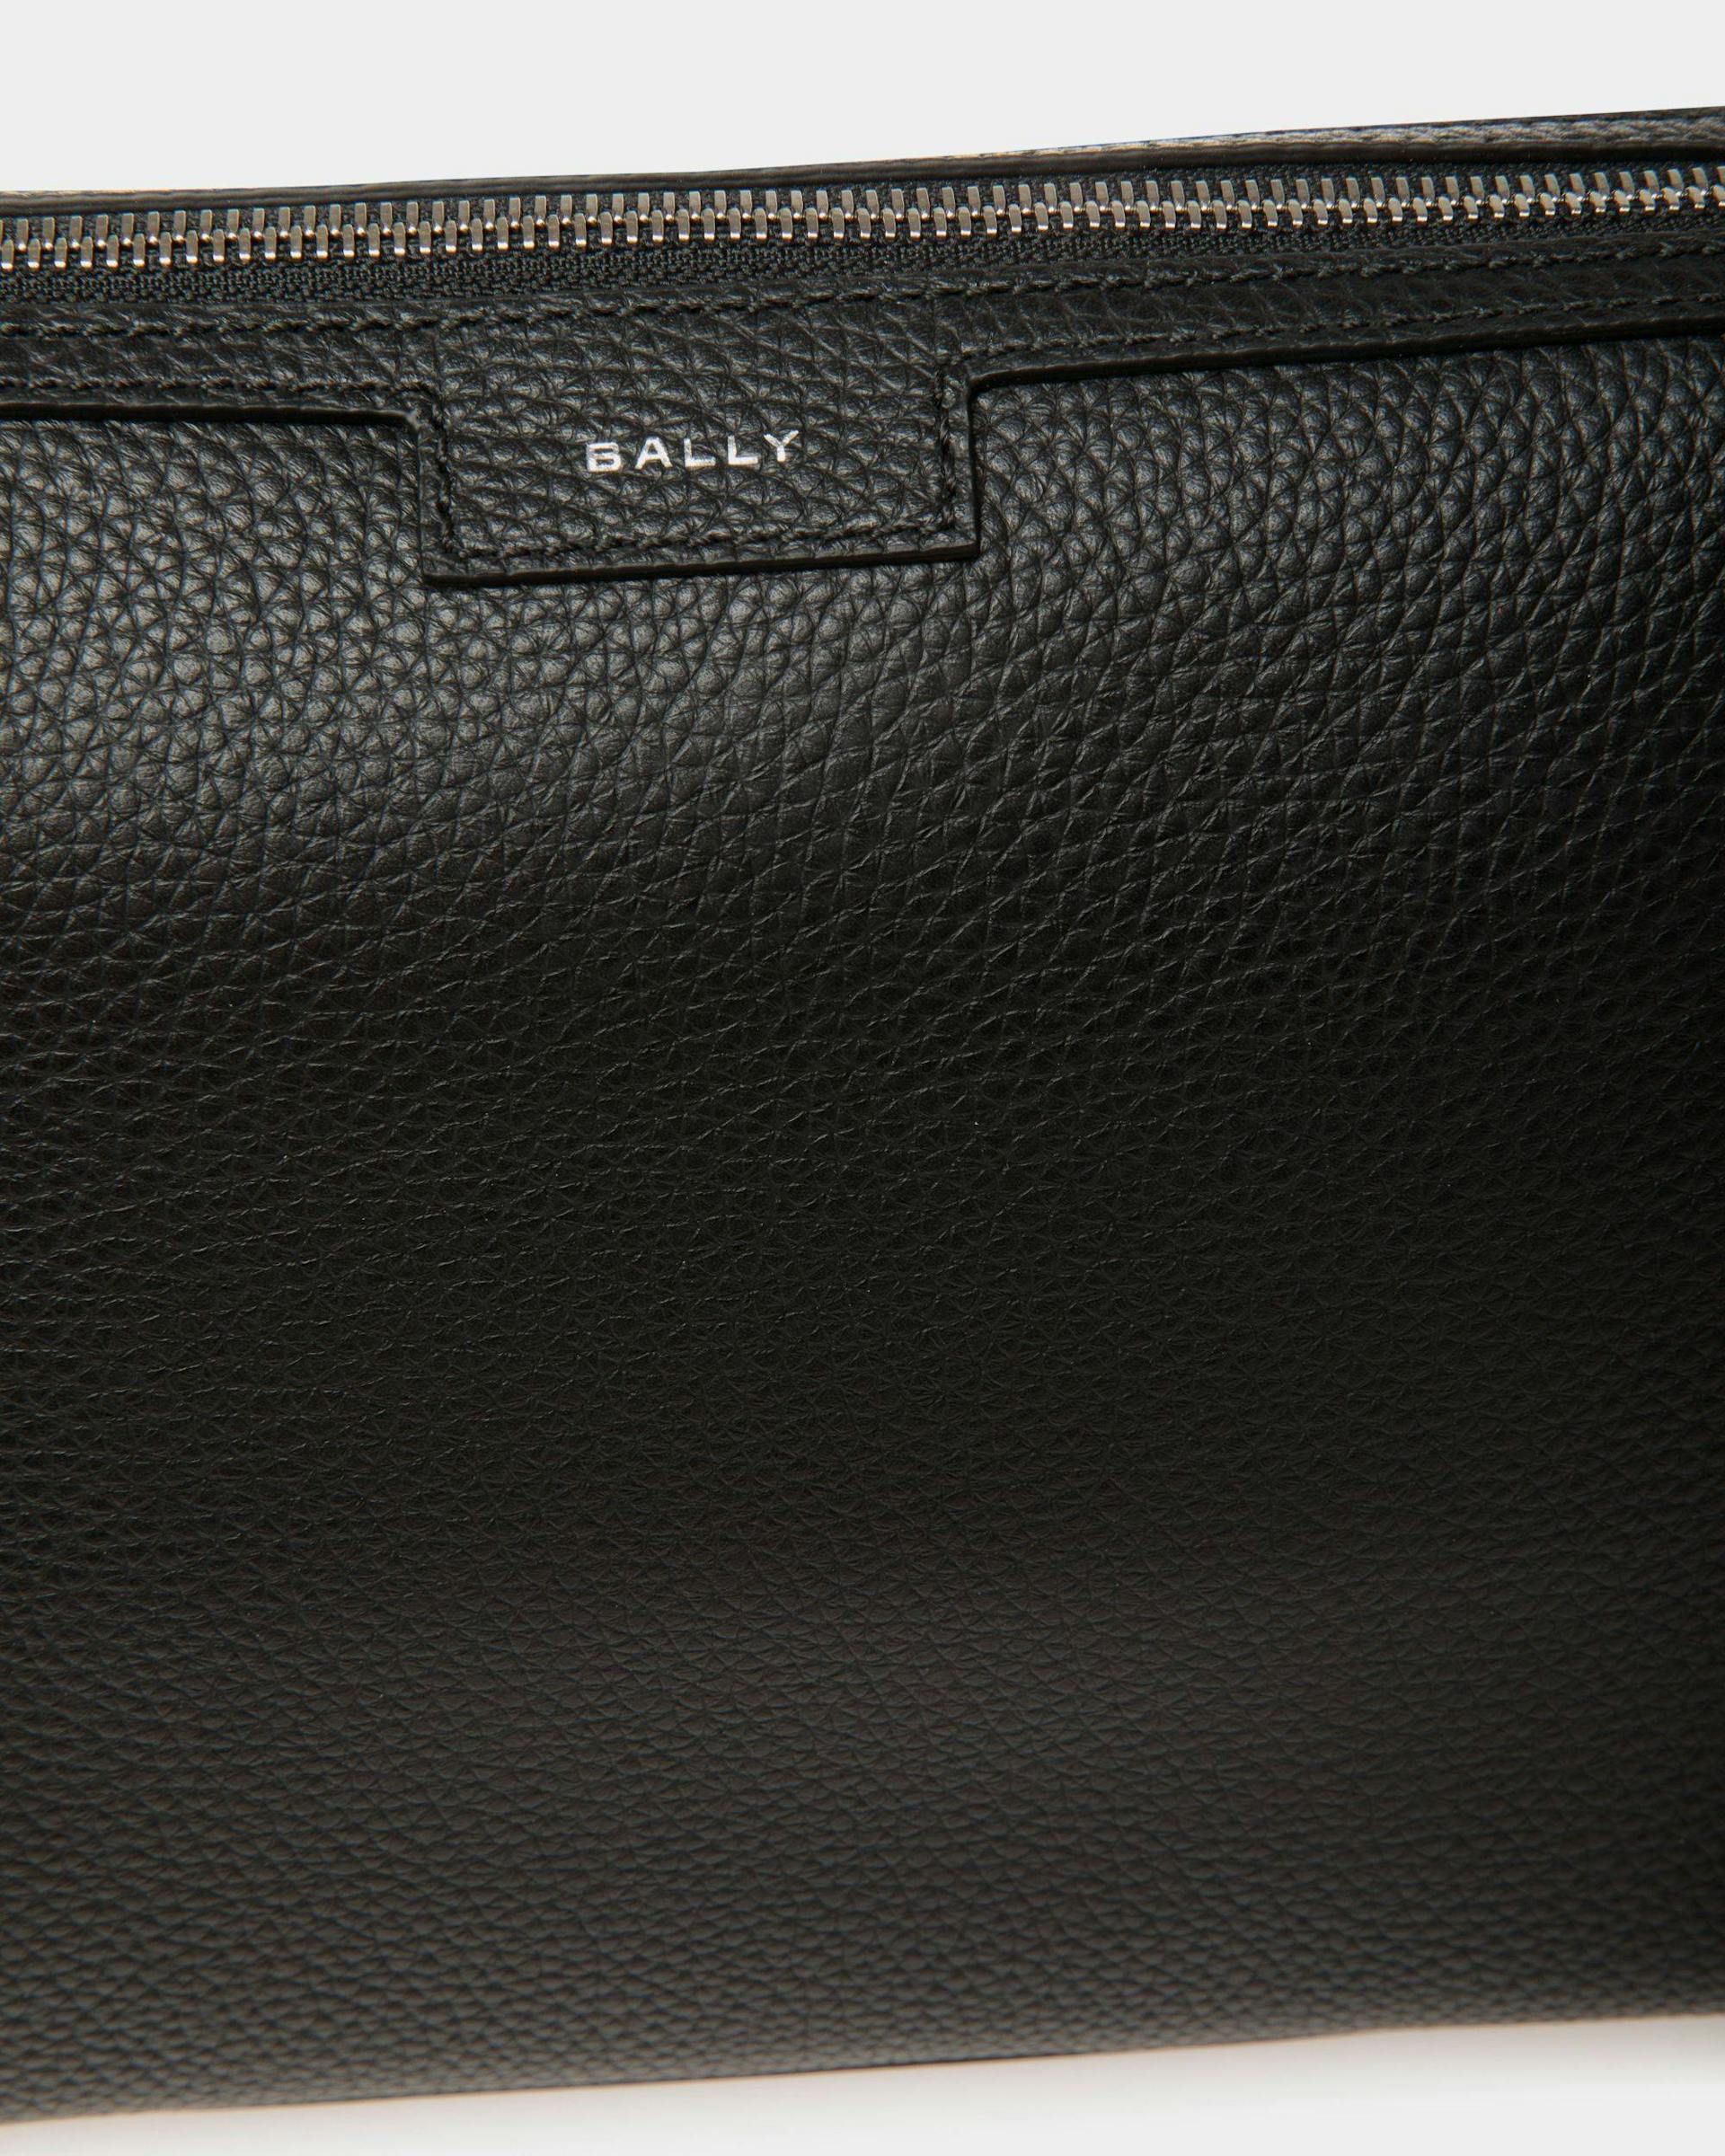 Men's Code Small Messenger Bag in Black Grained Leather | Bally | Still Life Detail